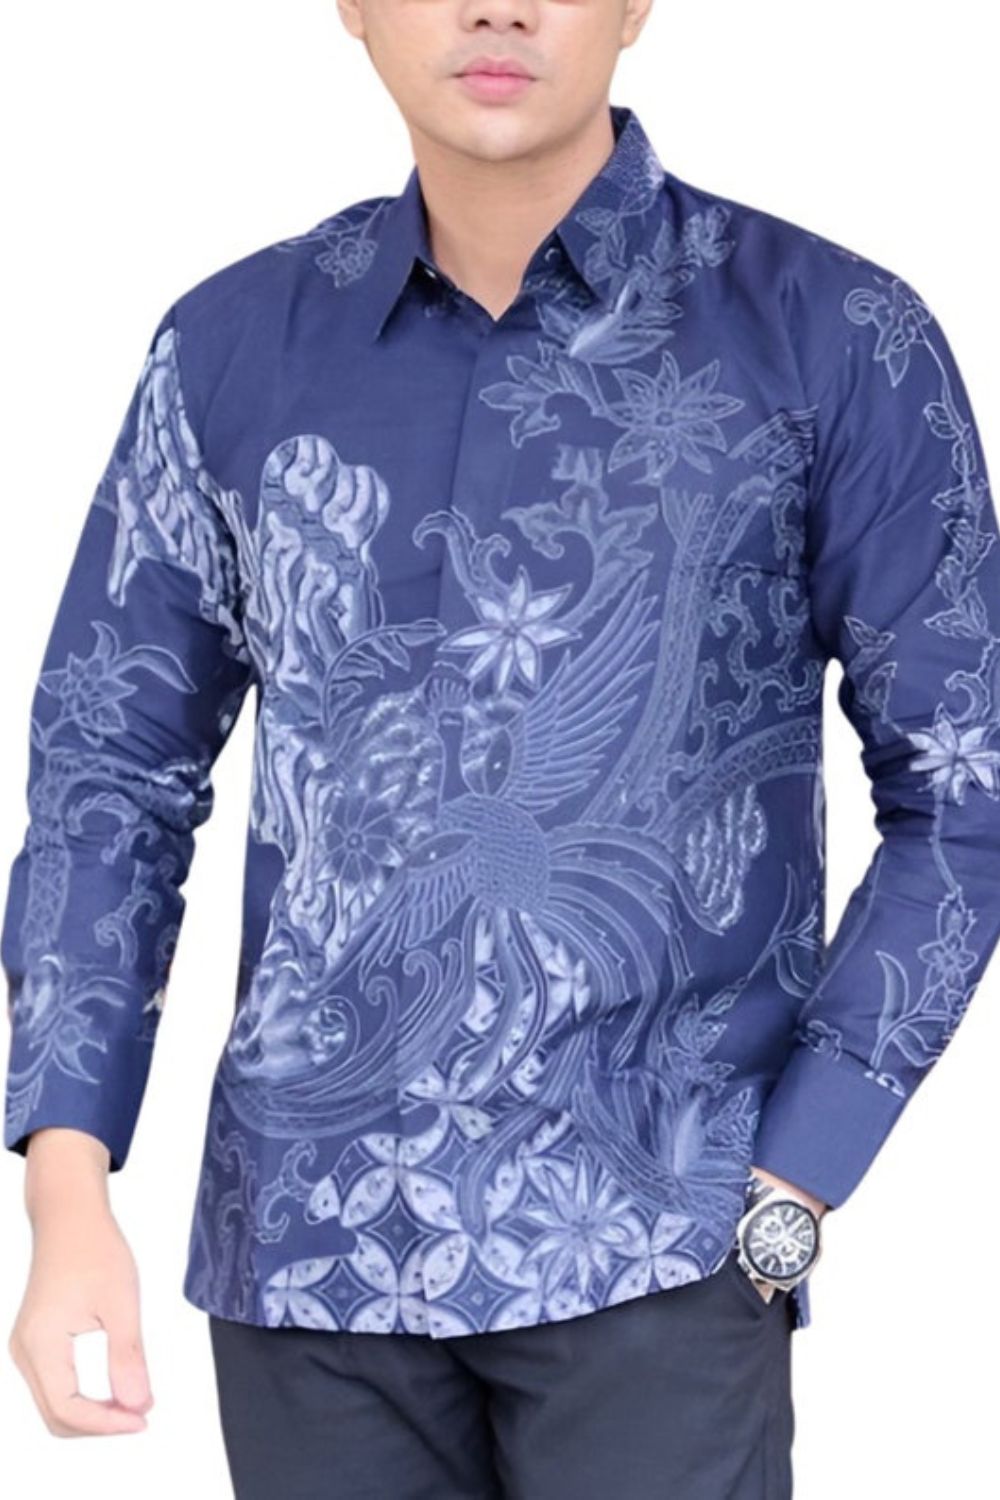 Blue Batik Shirt for Daily Wear